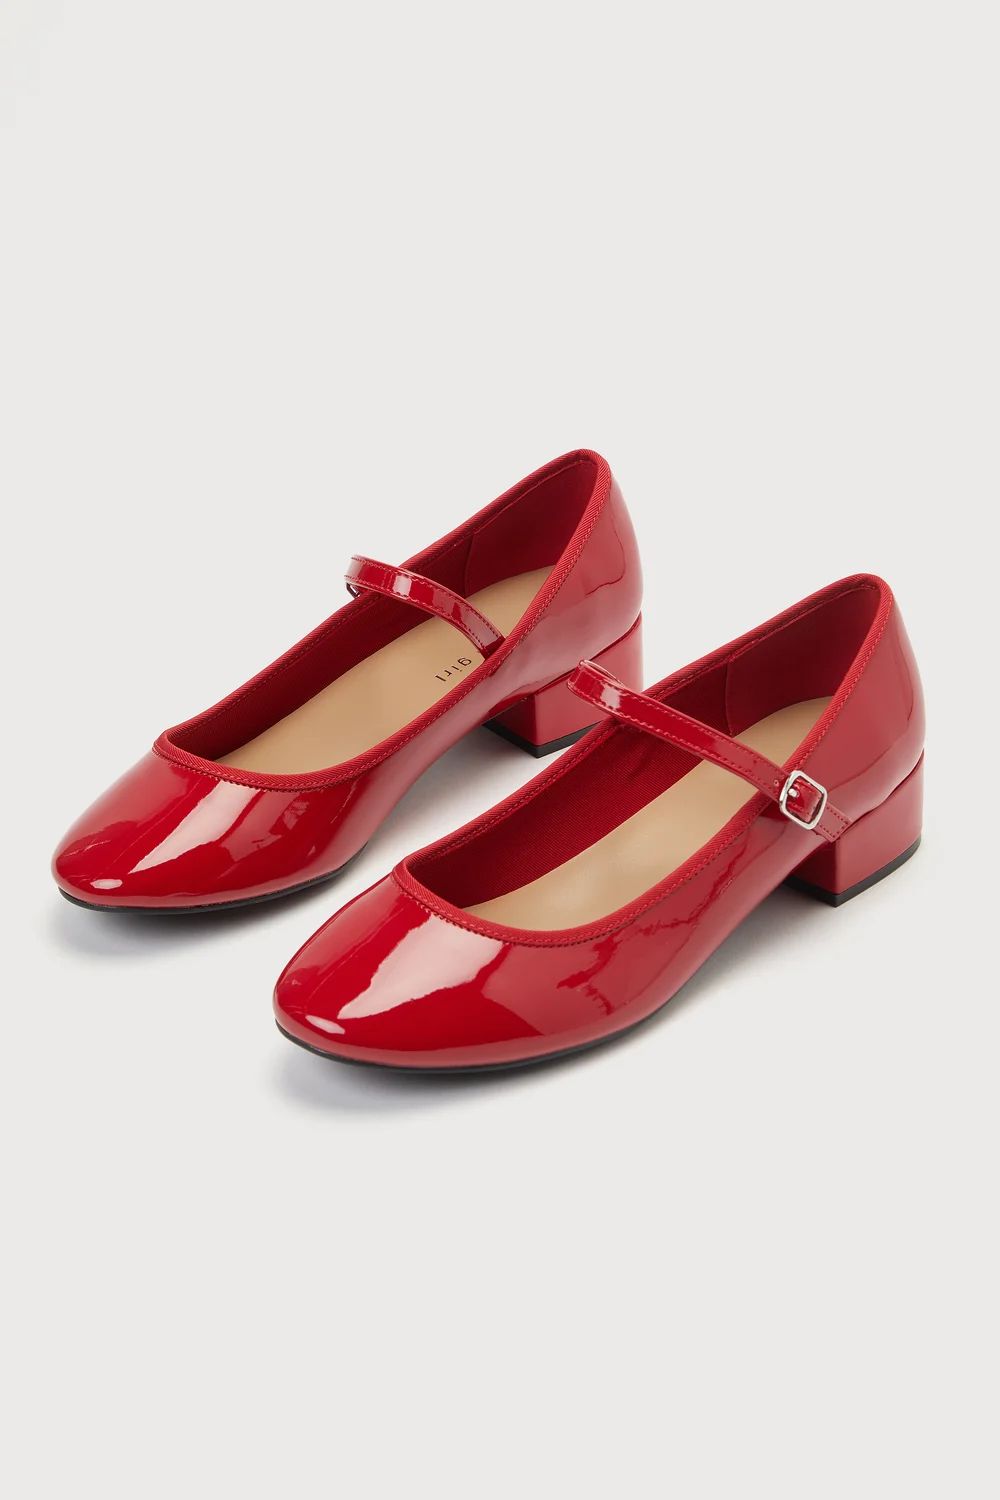 Tutu Red Patent Low Heel Mary Janes | Lulus